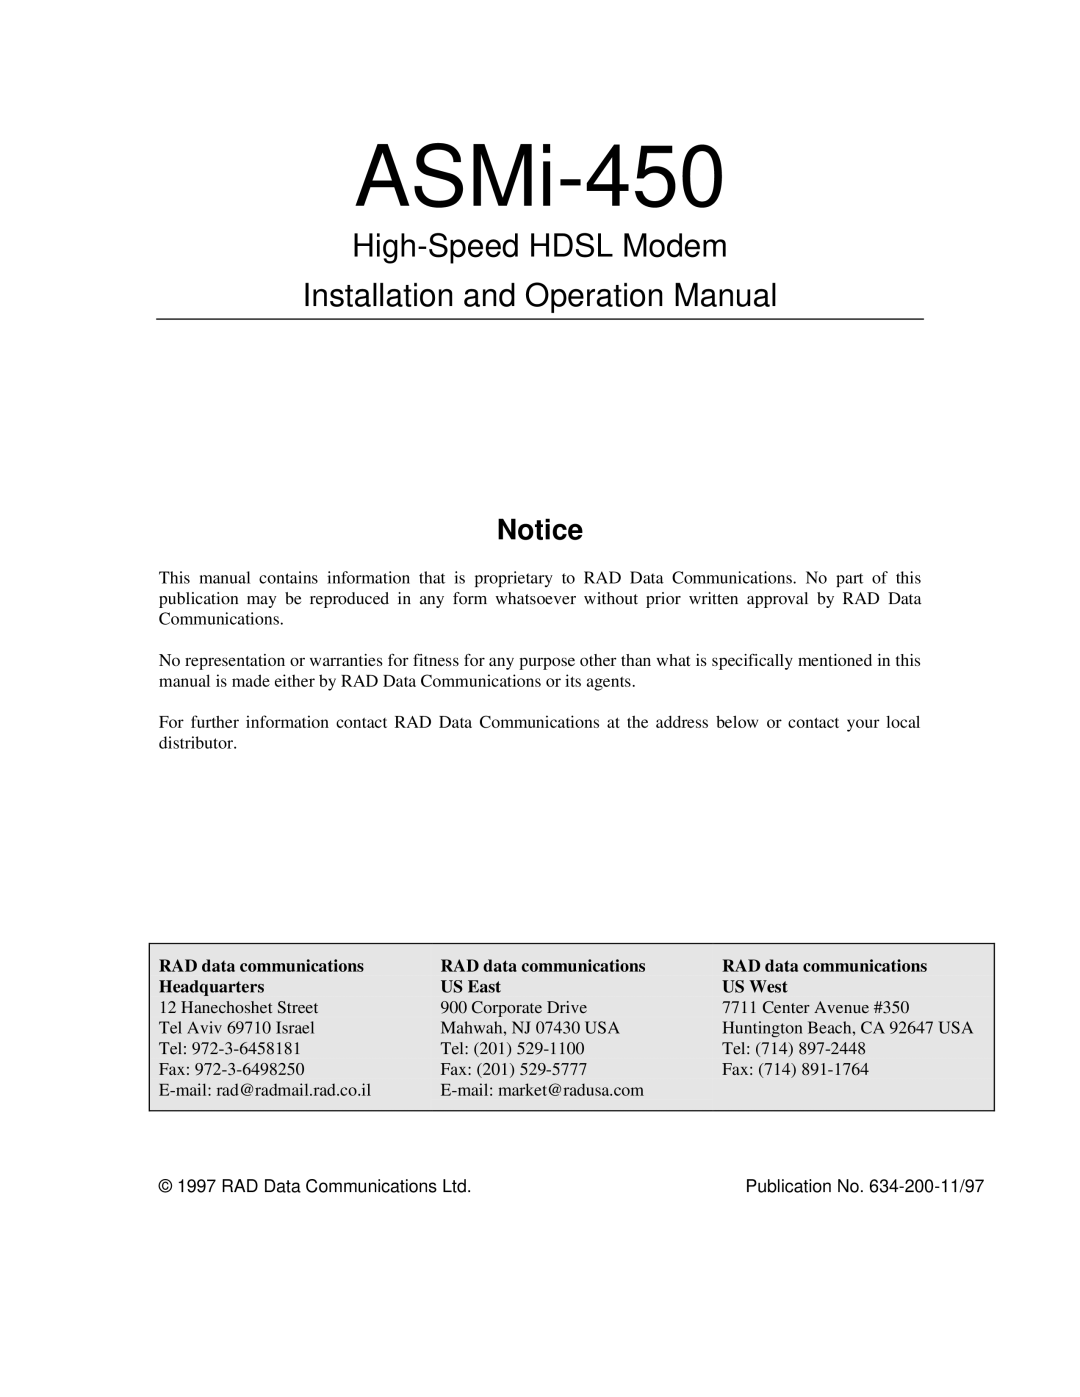 RAD Data comm ASMI-450 operation manual ASMi-450, High-Speed HDSL Modem Installation and Operation Manual, Headquarters 